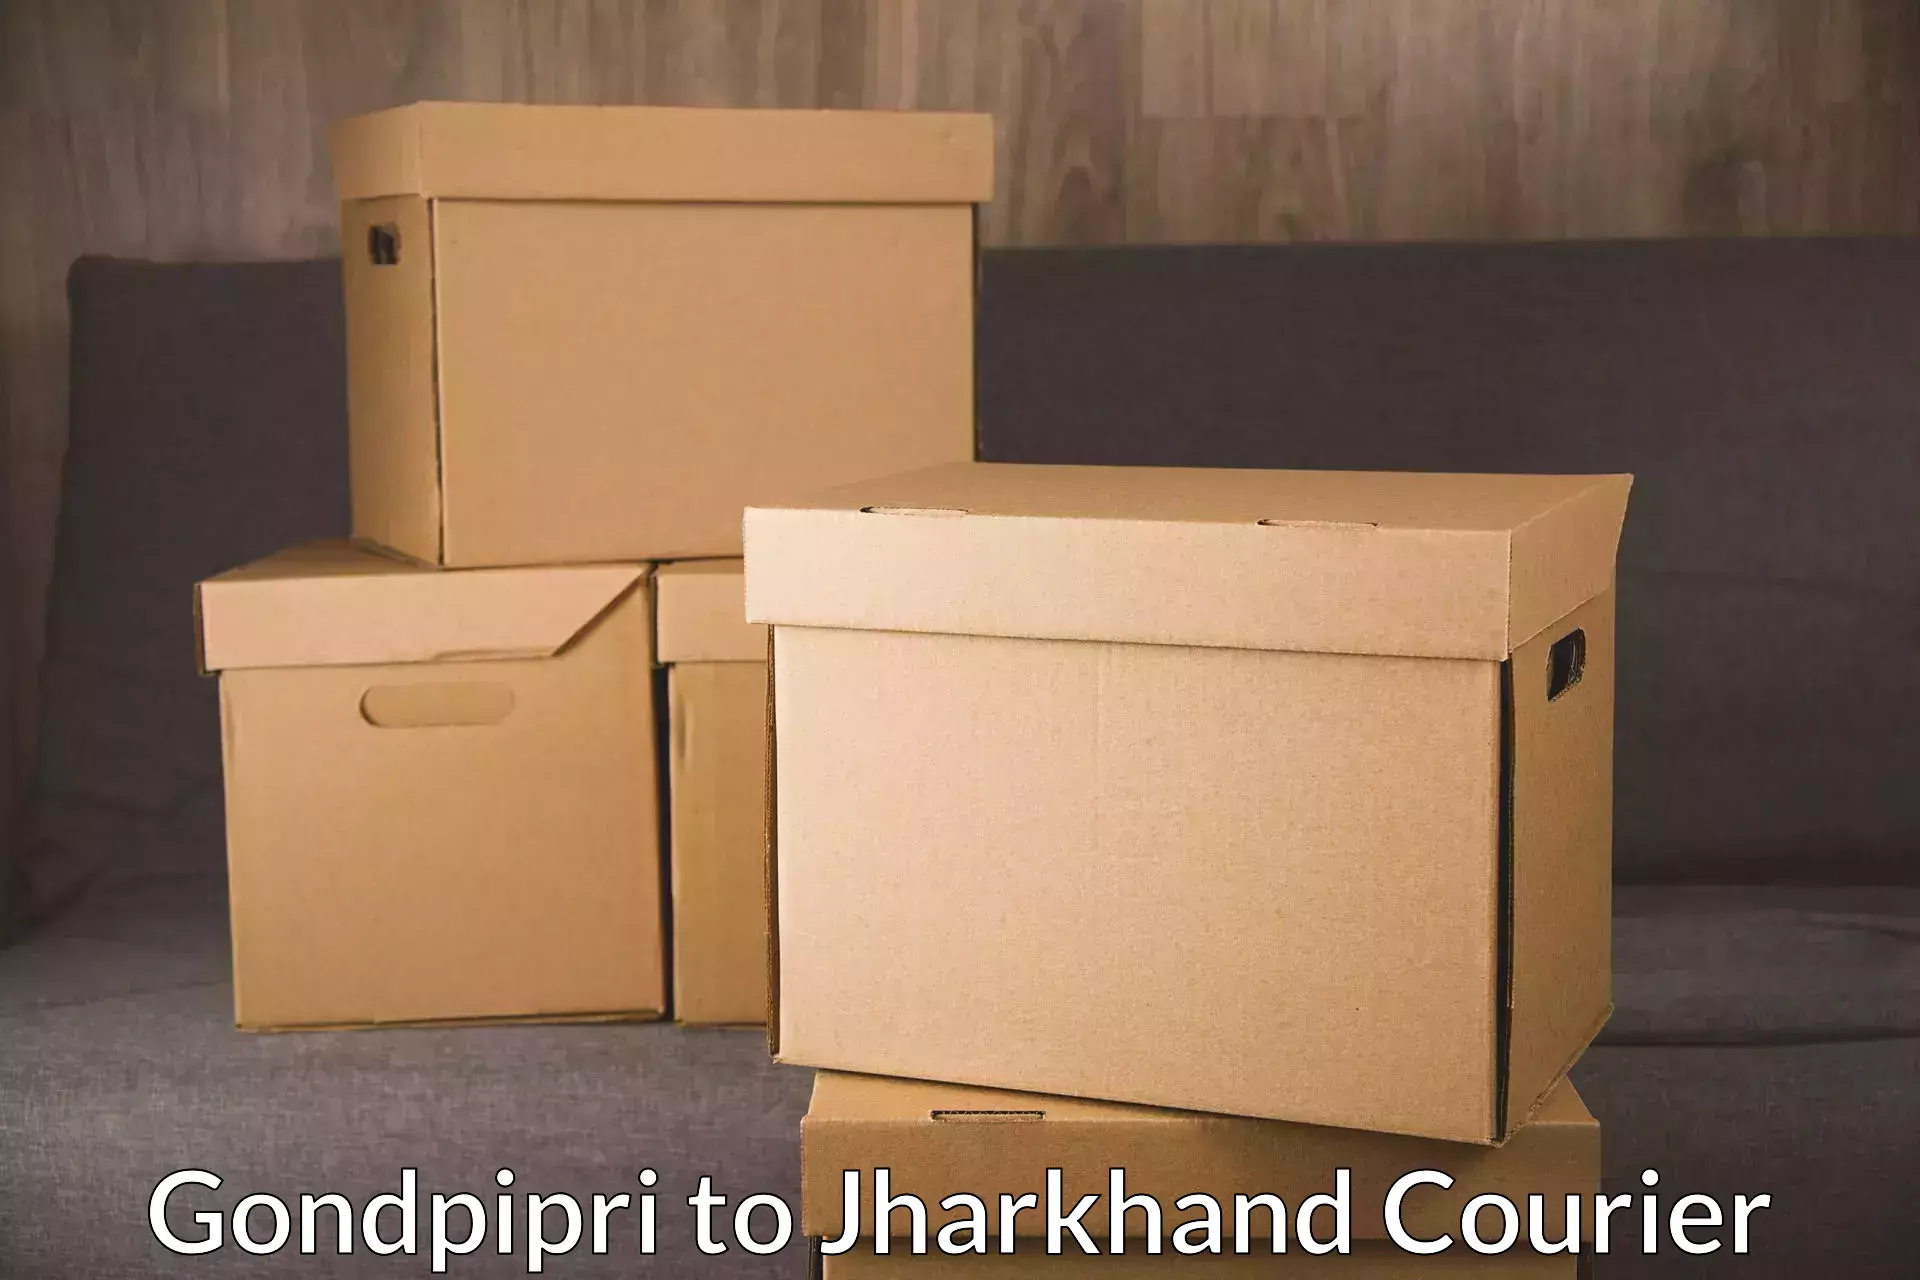 Urgent courier needs Gondpipri to Jamshedpur